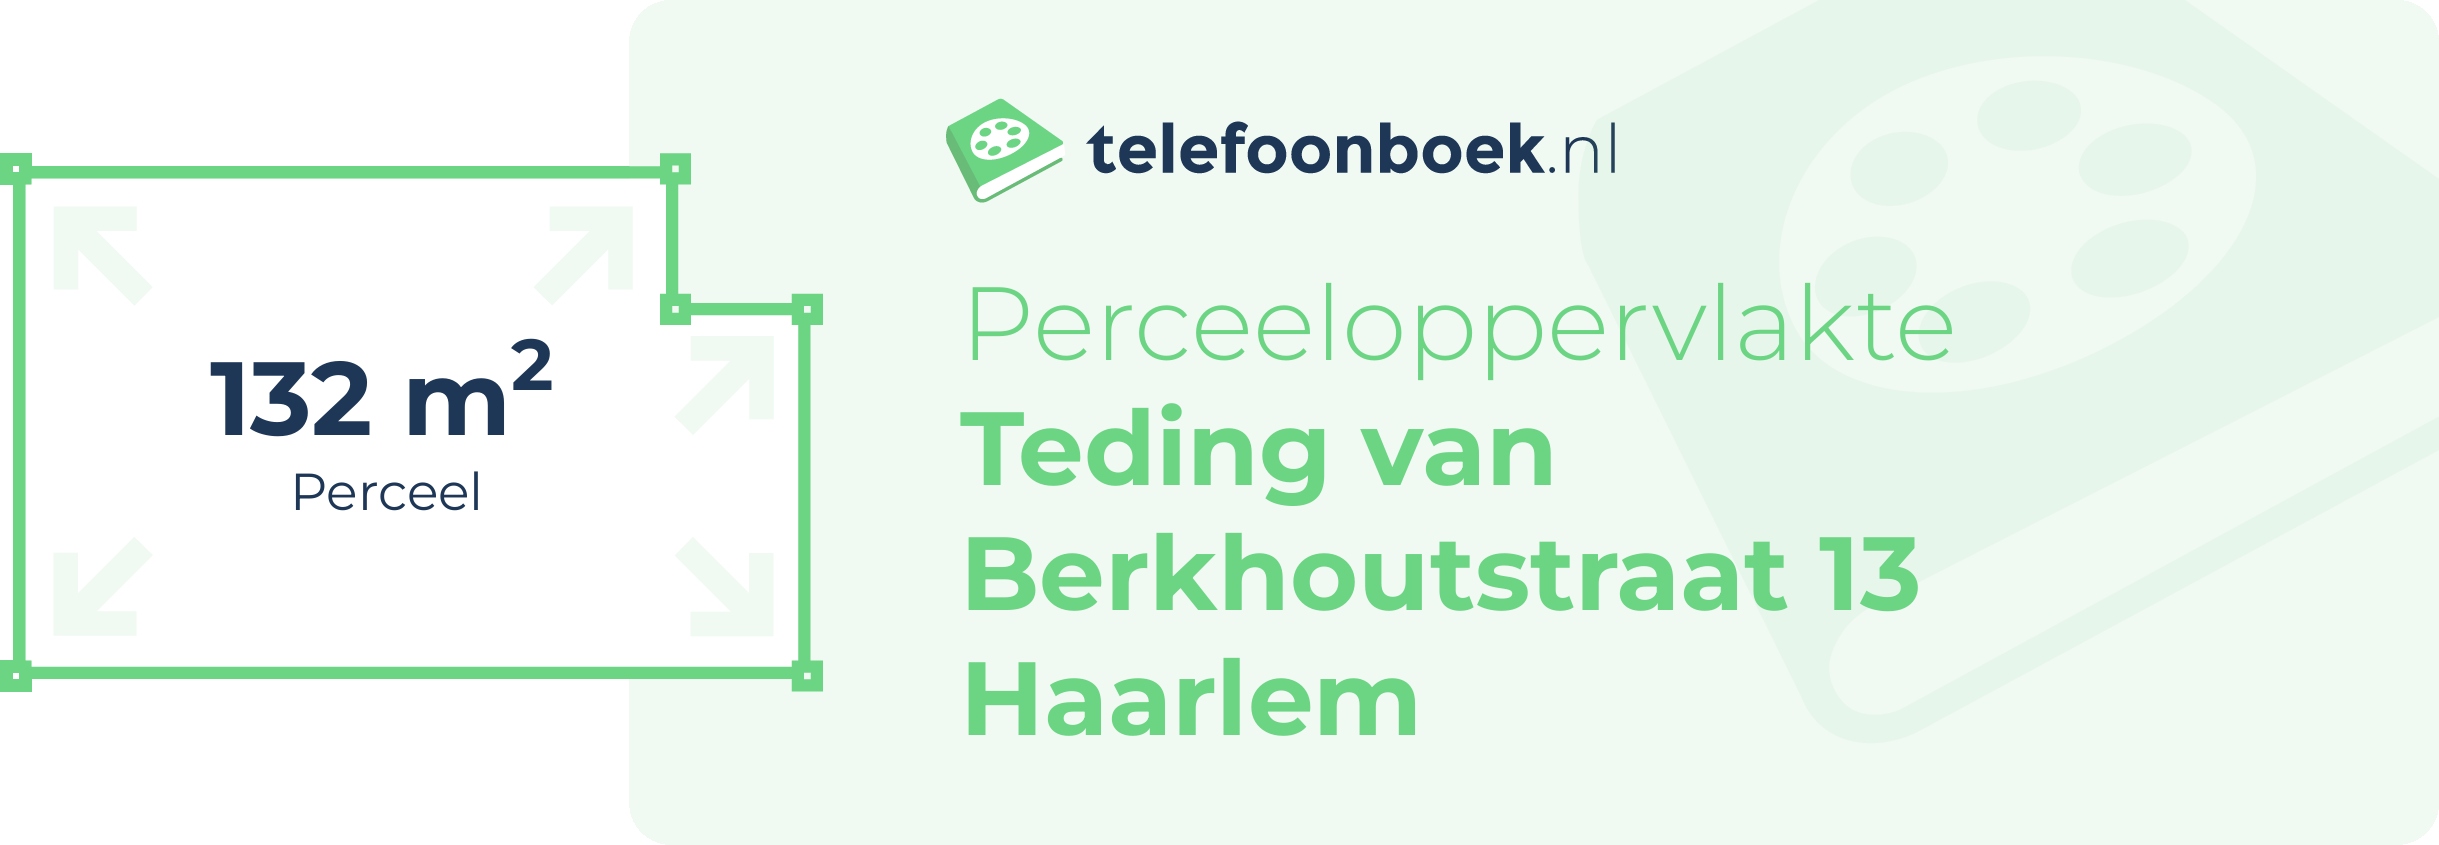 Perceeloppervlakte Teding Van Berkhoutstraat 13 Haarlem